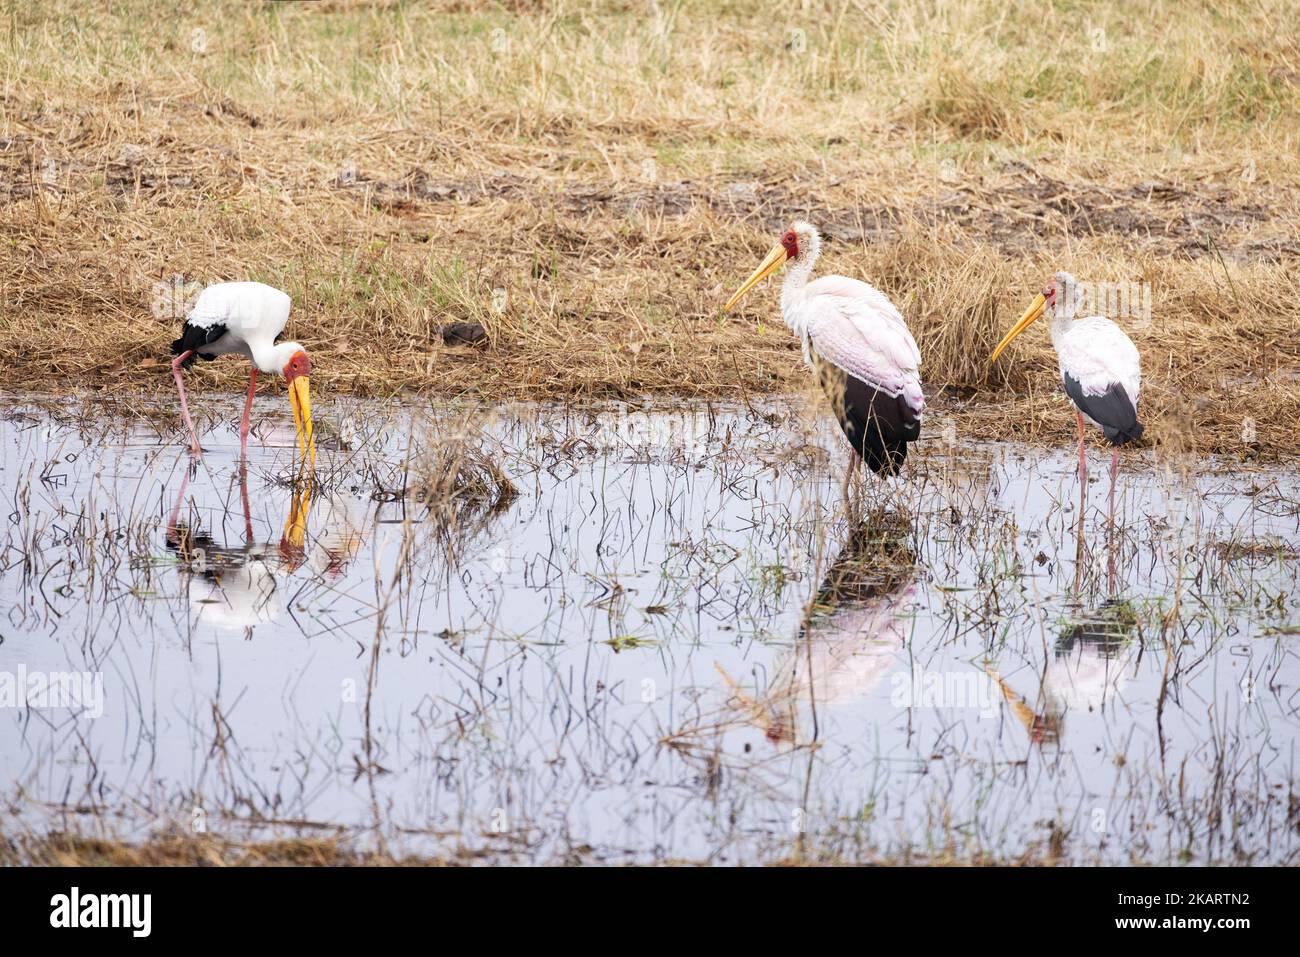 Yellow Billed Stork, Mycteria ibis; three birds standing and feeding in water, Okavango delta, Botswana Africa. African birds. Stock Photo